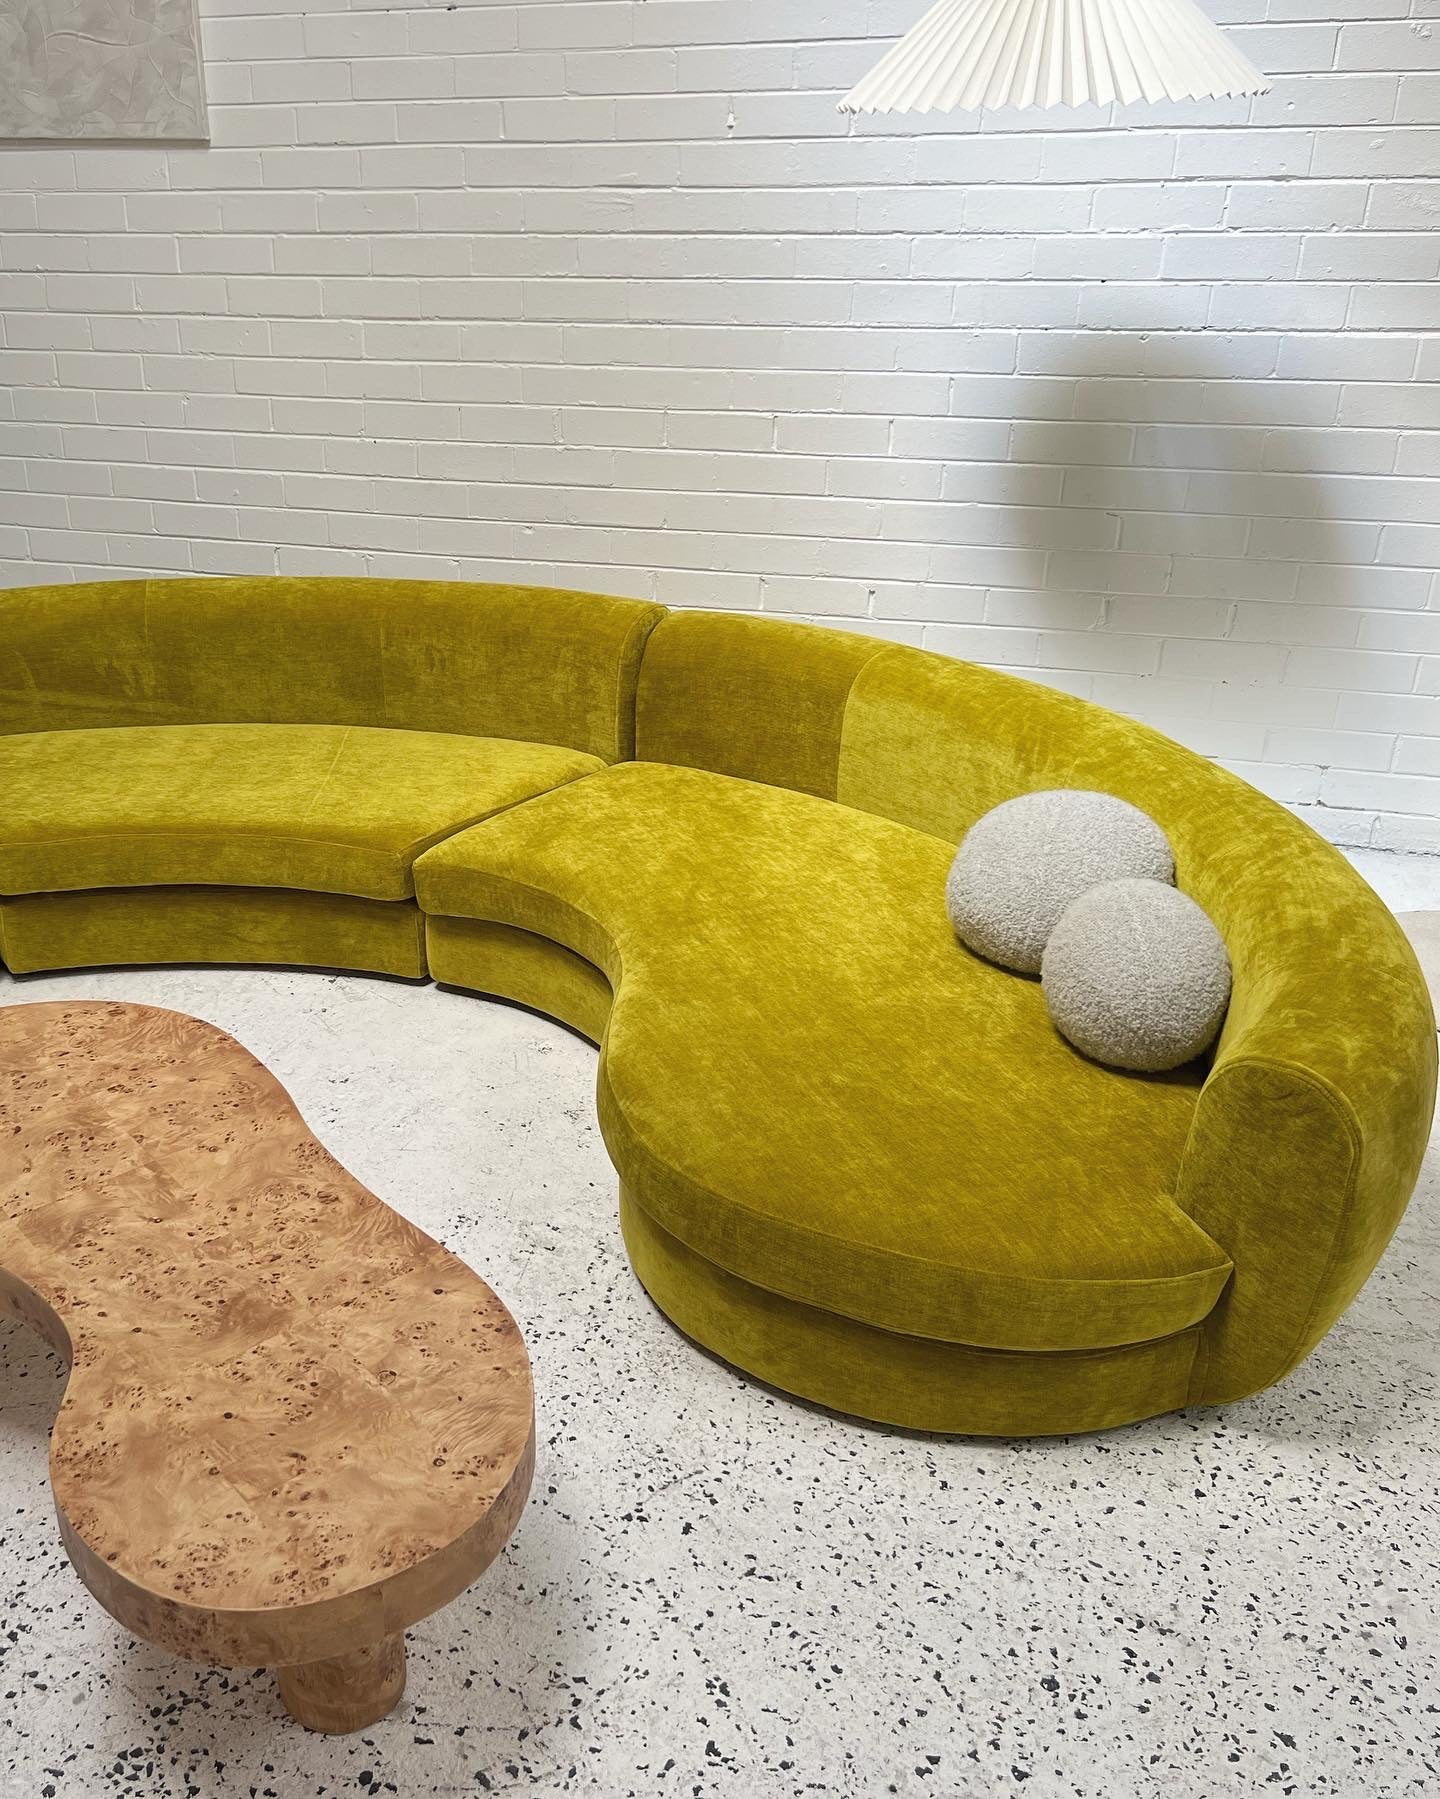 - Bespoke Large Chartreuse Velvet Curved Modular Sofa